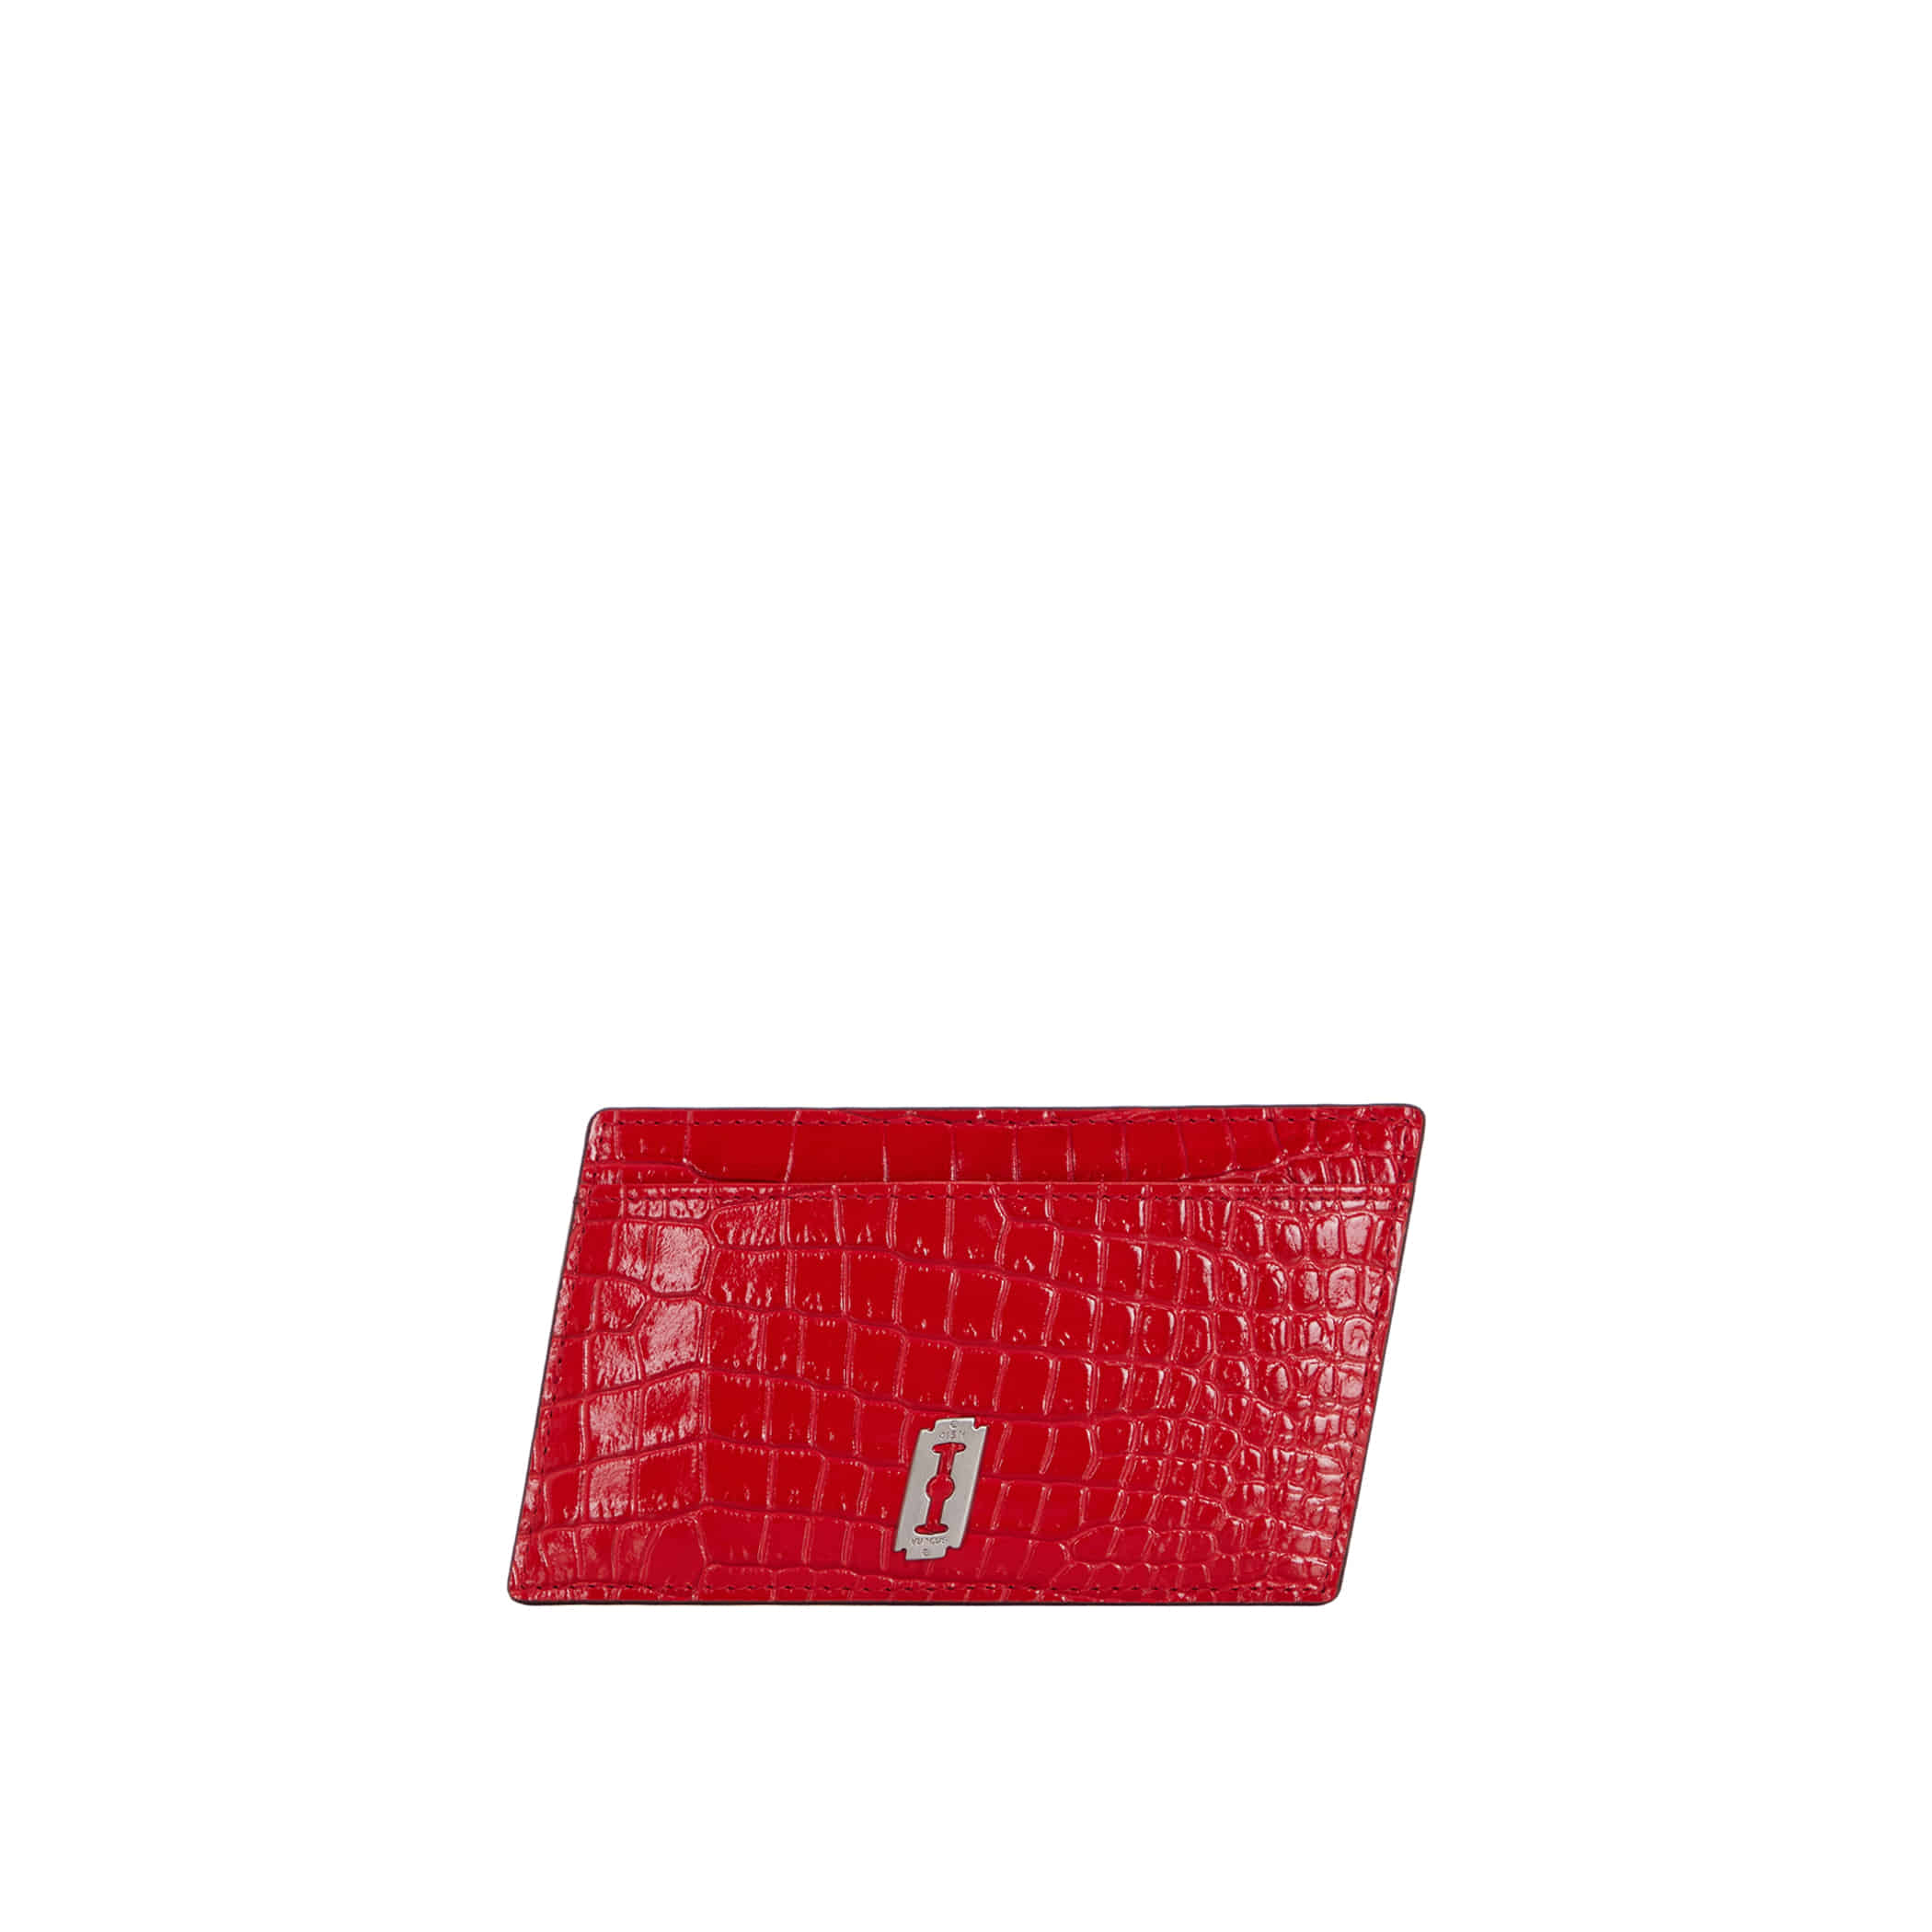 Mercury Square Card Holder (머큐리 스퀘어 카드홀더) Red